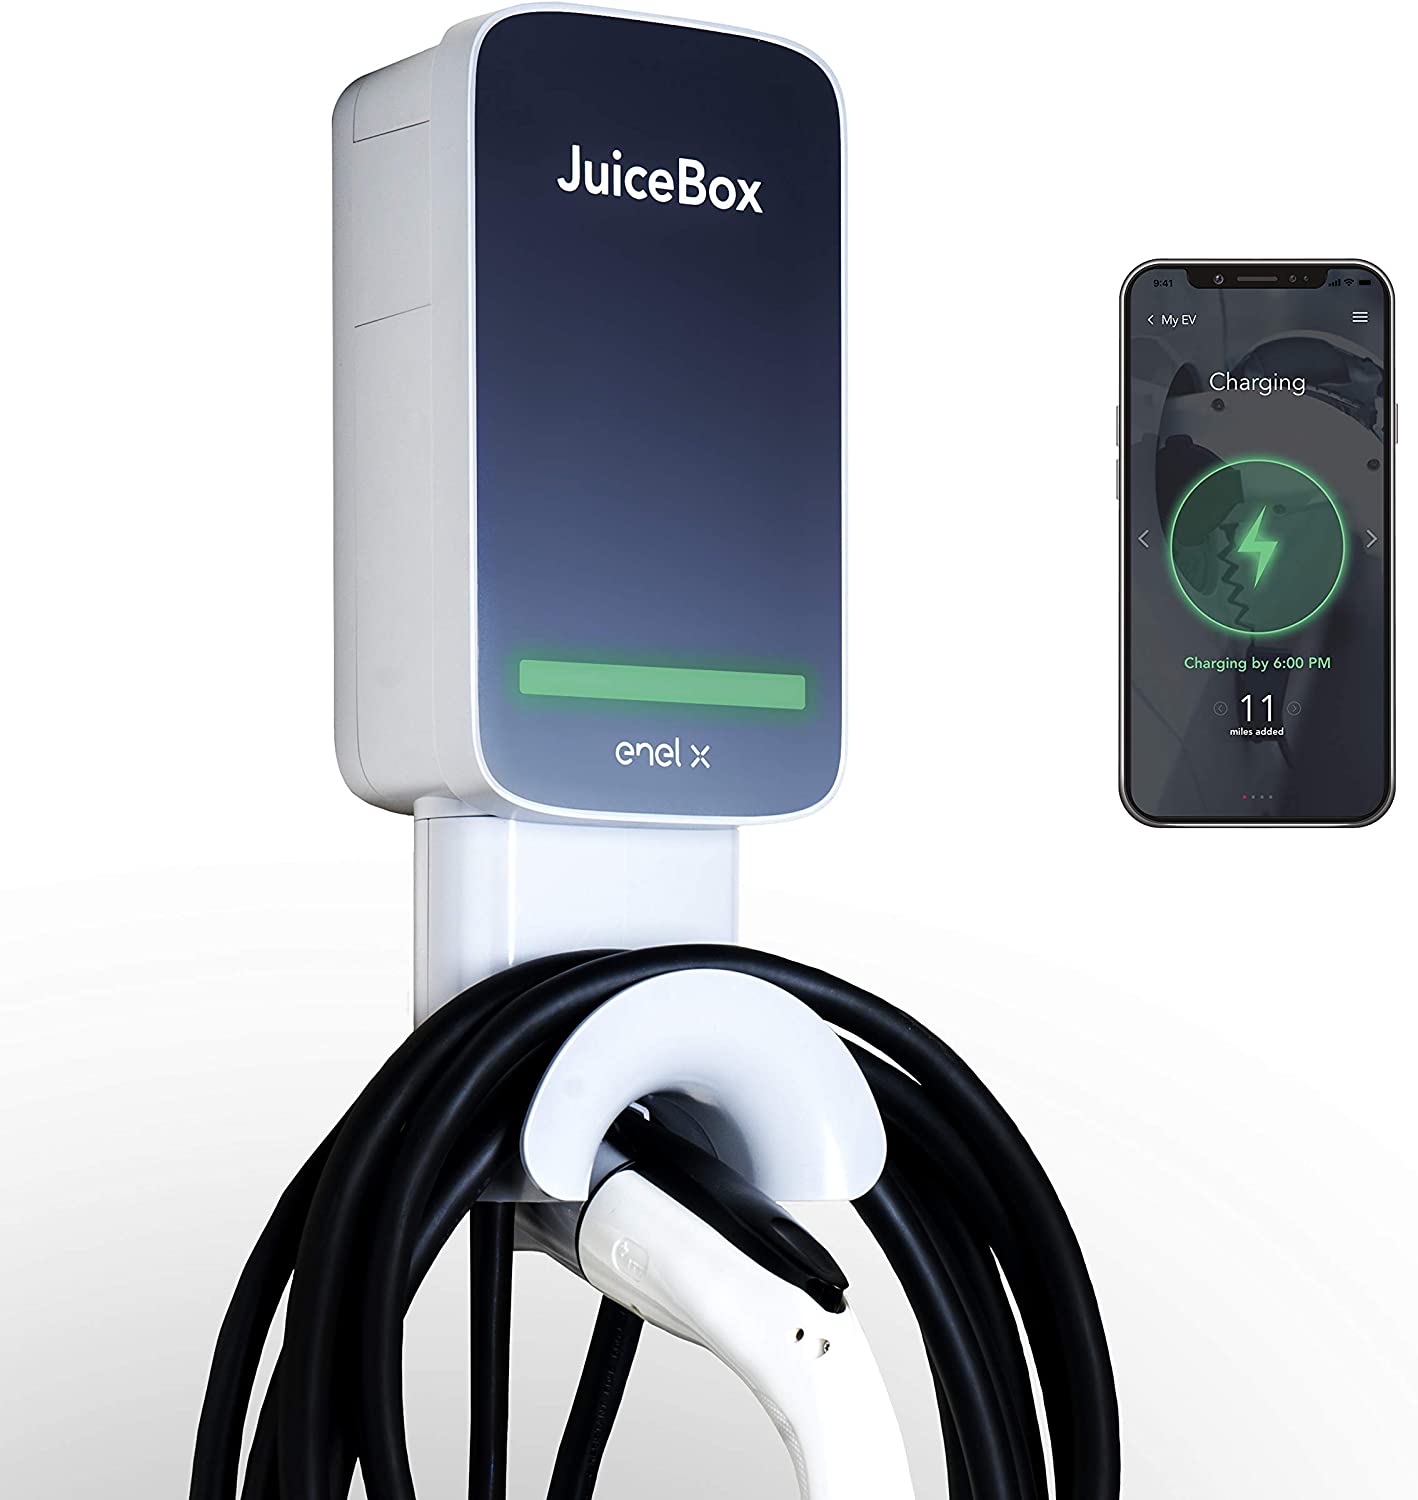 JuiceBox 40 Smart Electric Vehicle (EV) Charging Station.